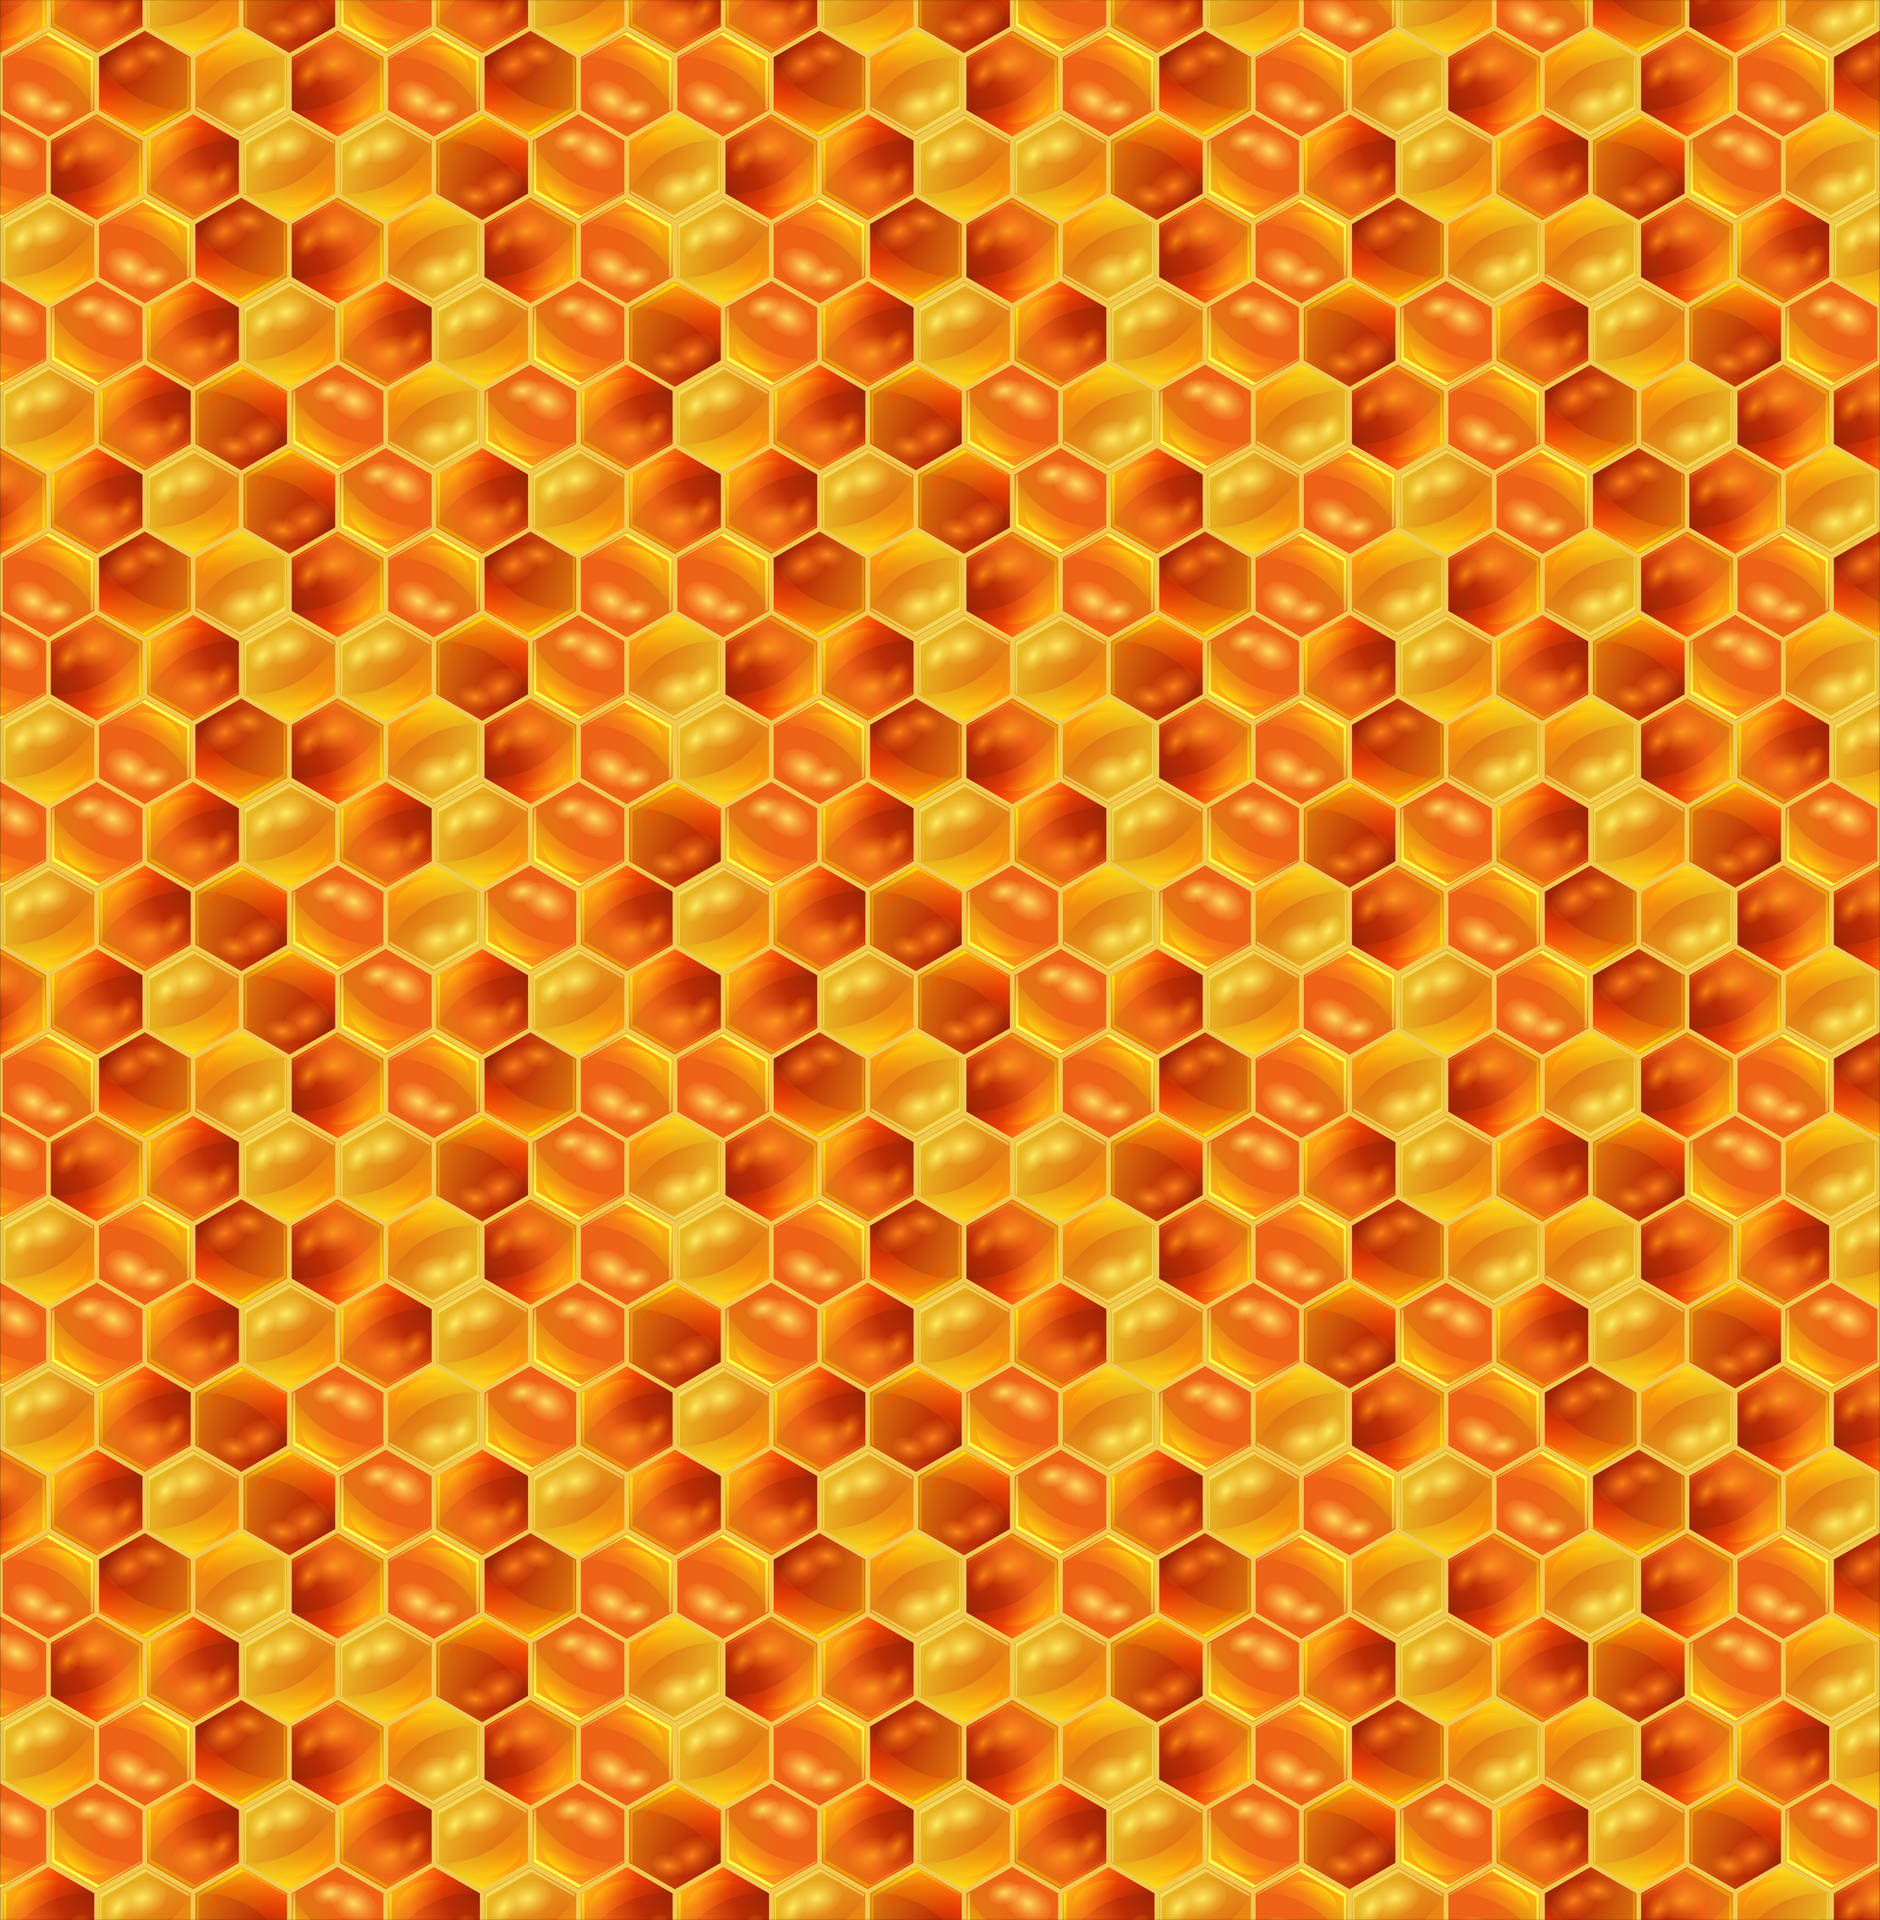 Honeycomb Digital Art